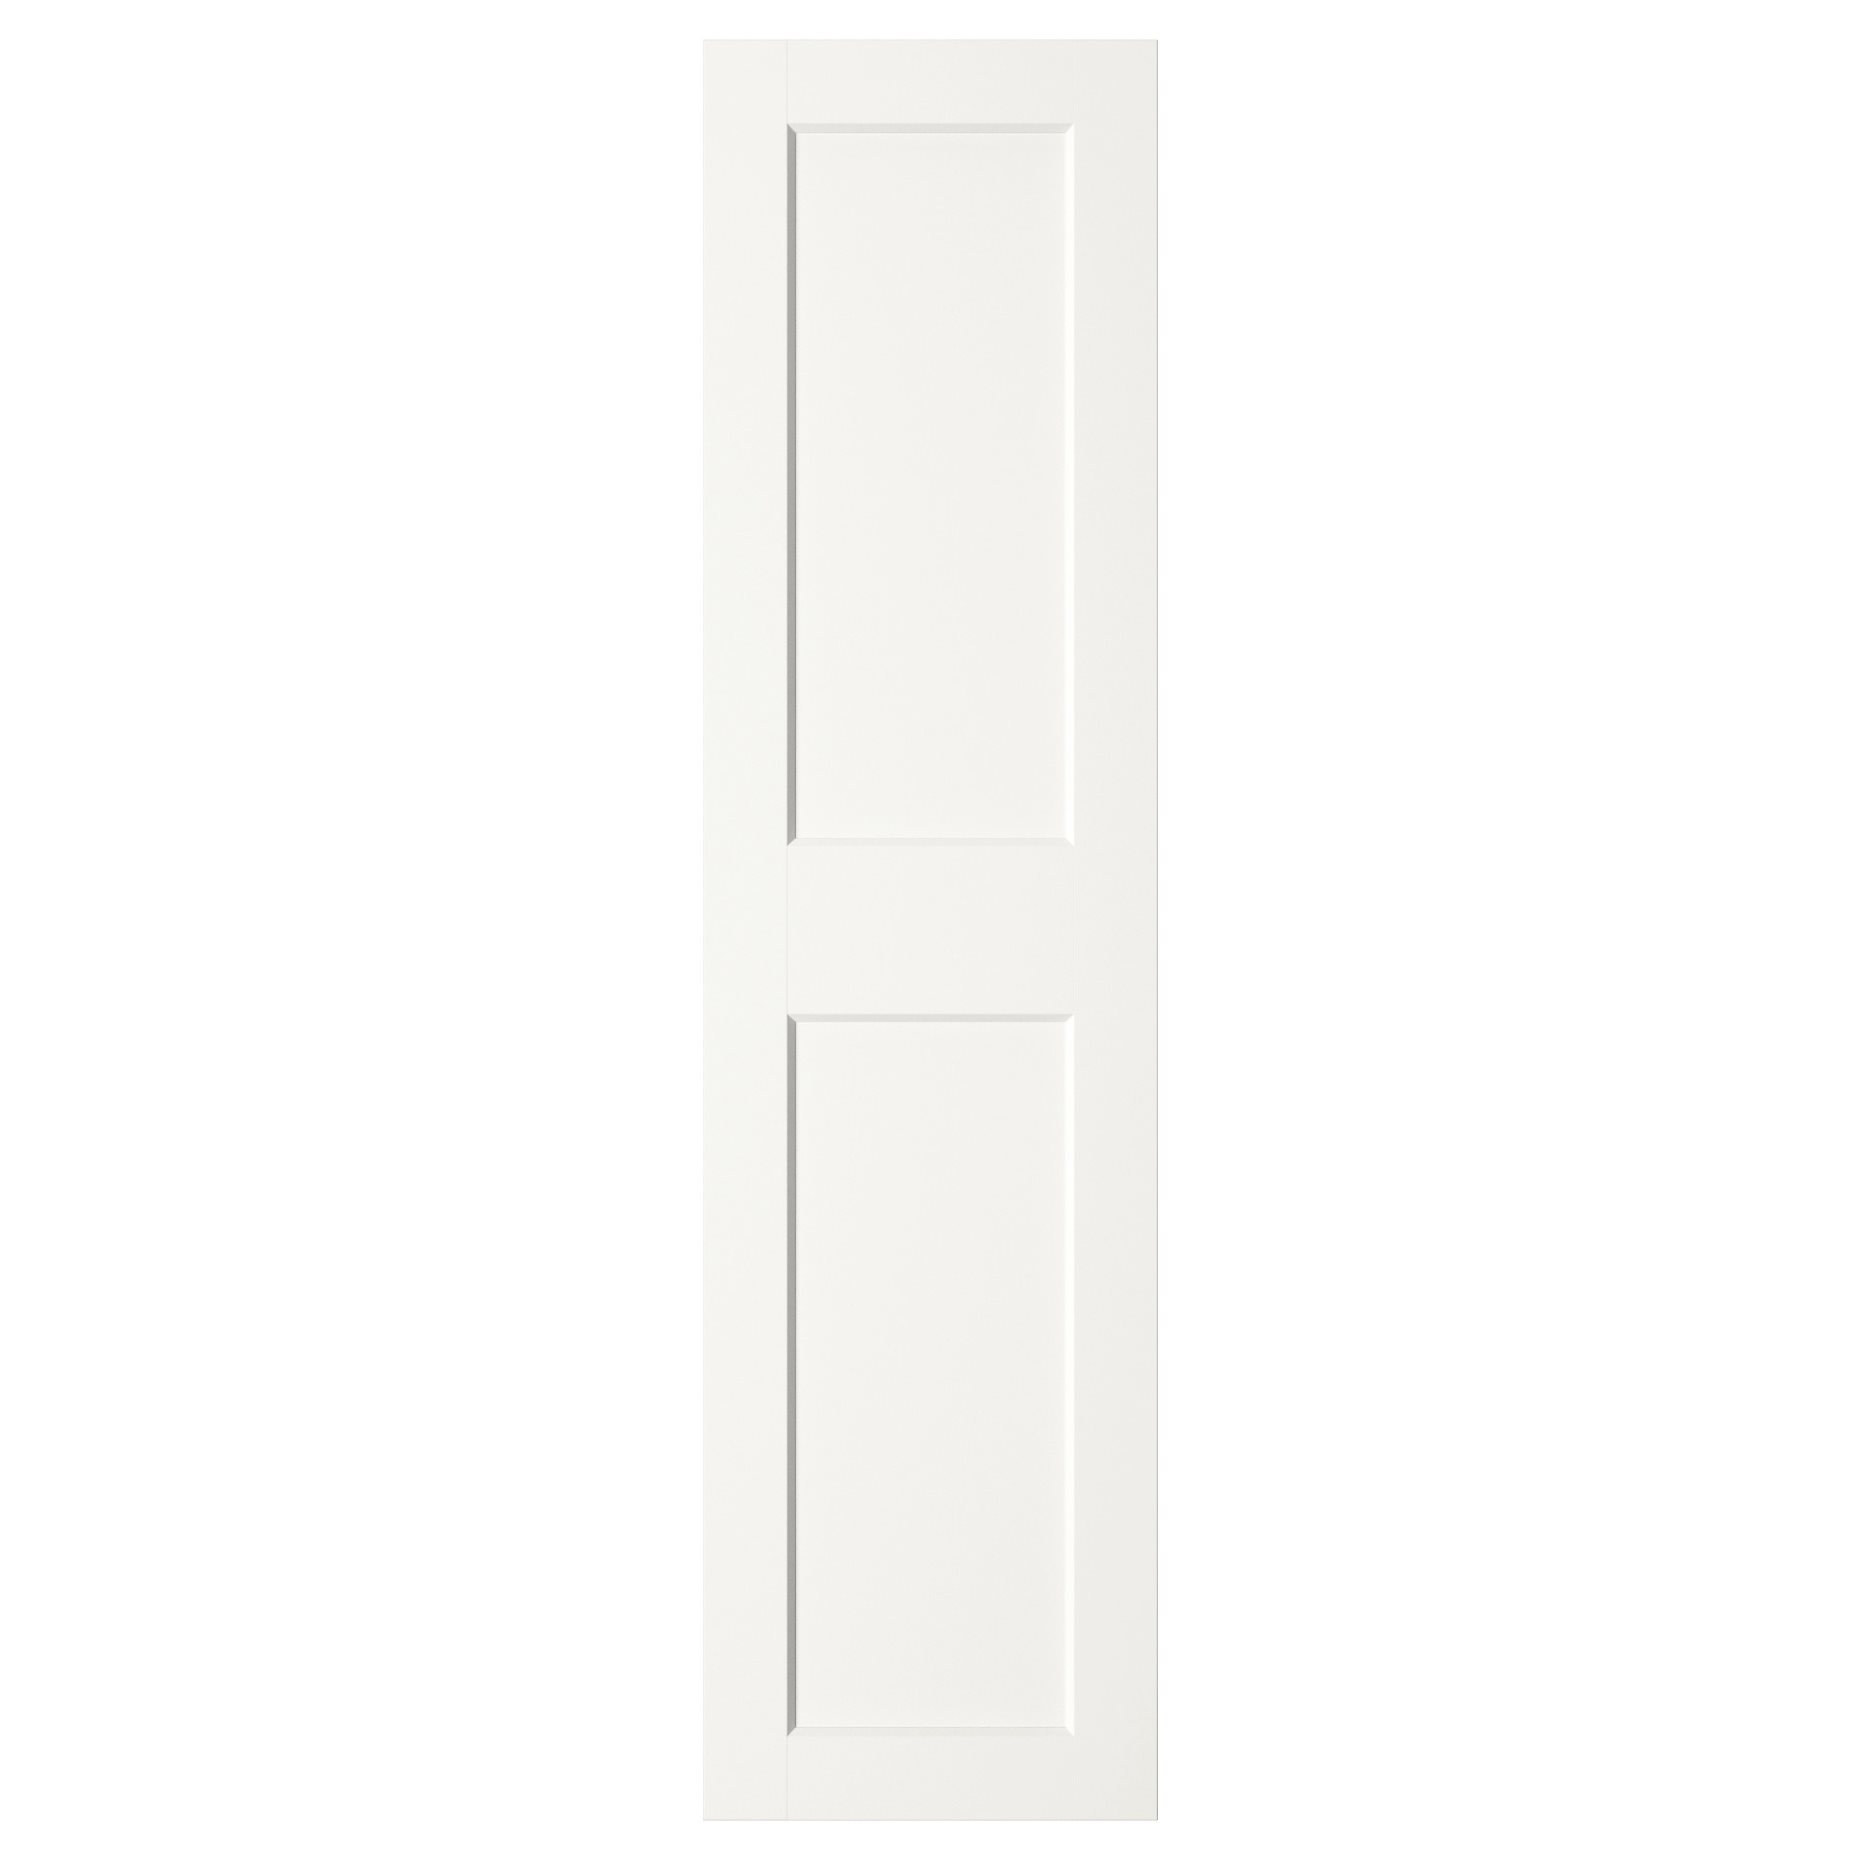 GRIMO, πόρτα με μεντεσέδες, 50x195 cm, 991.835.81